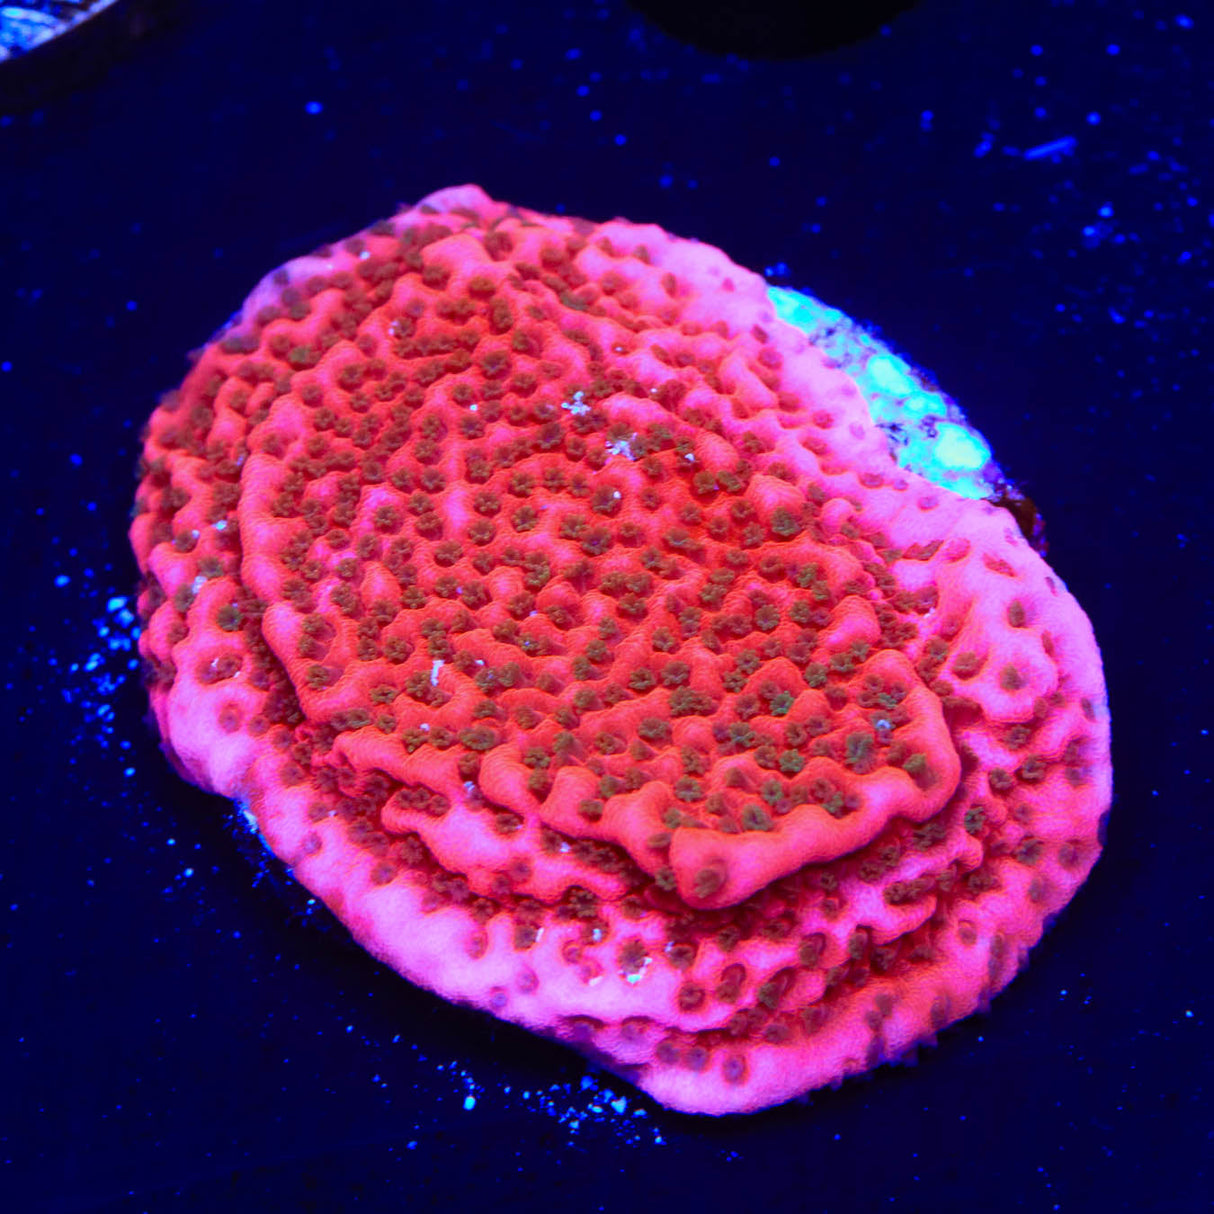 WWC Cherry Tree Montipora Coral